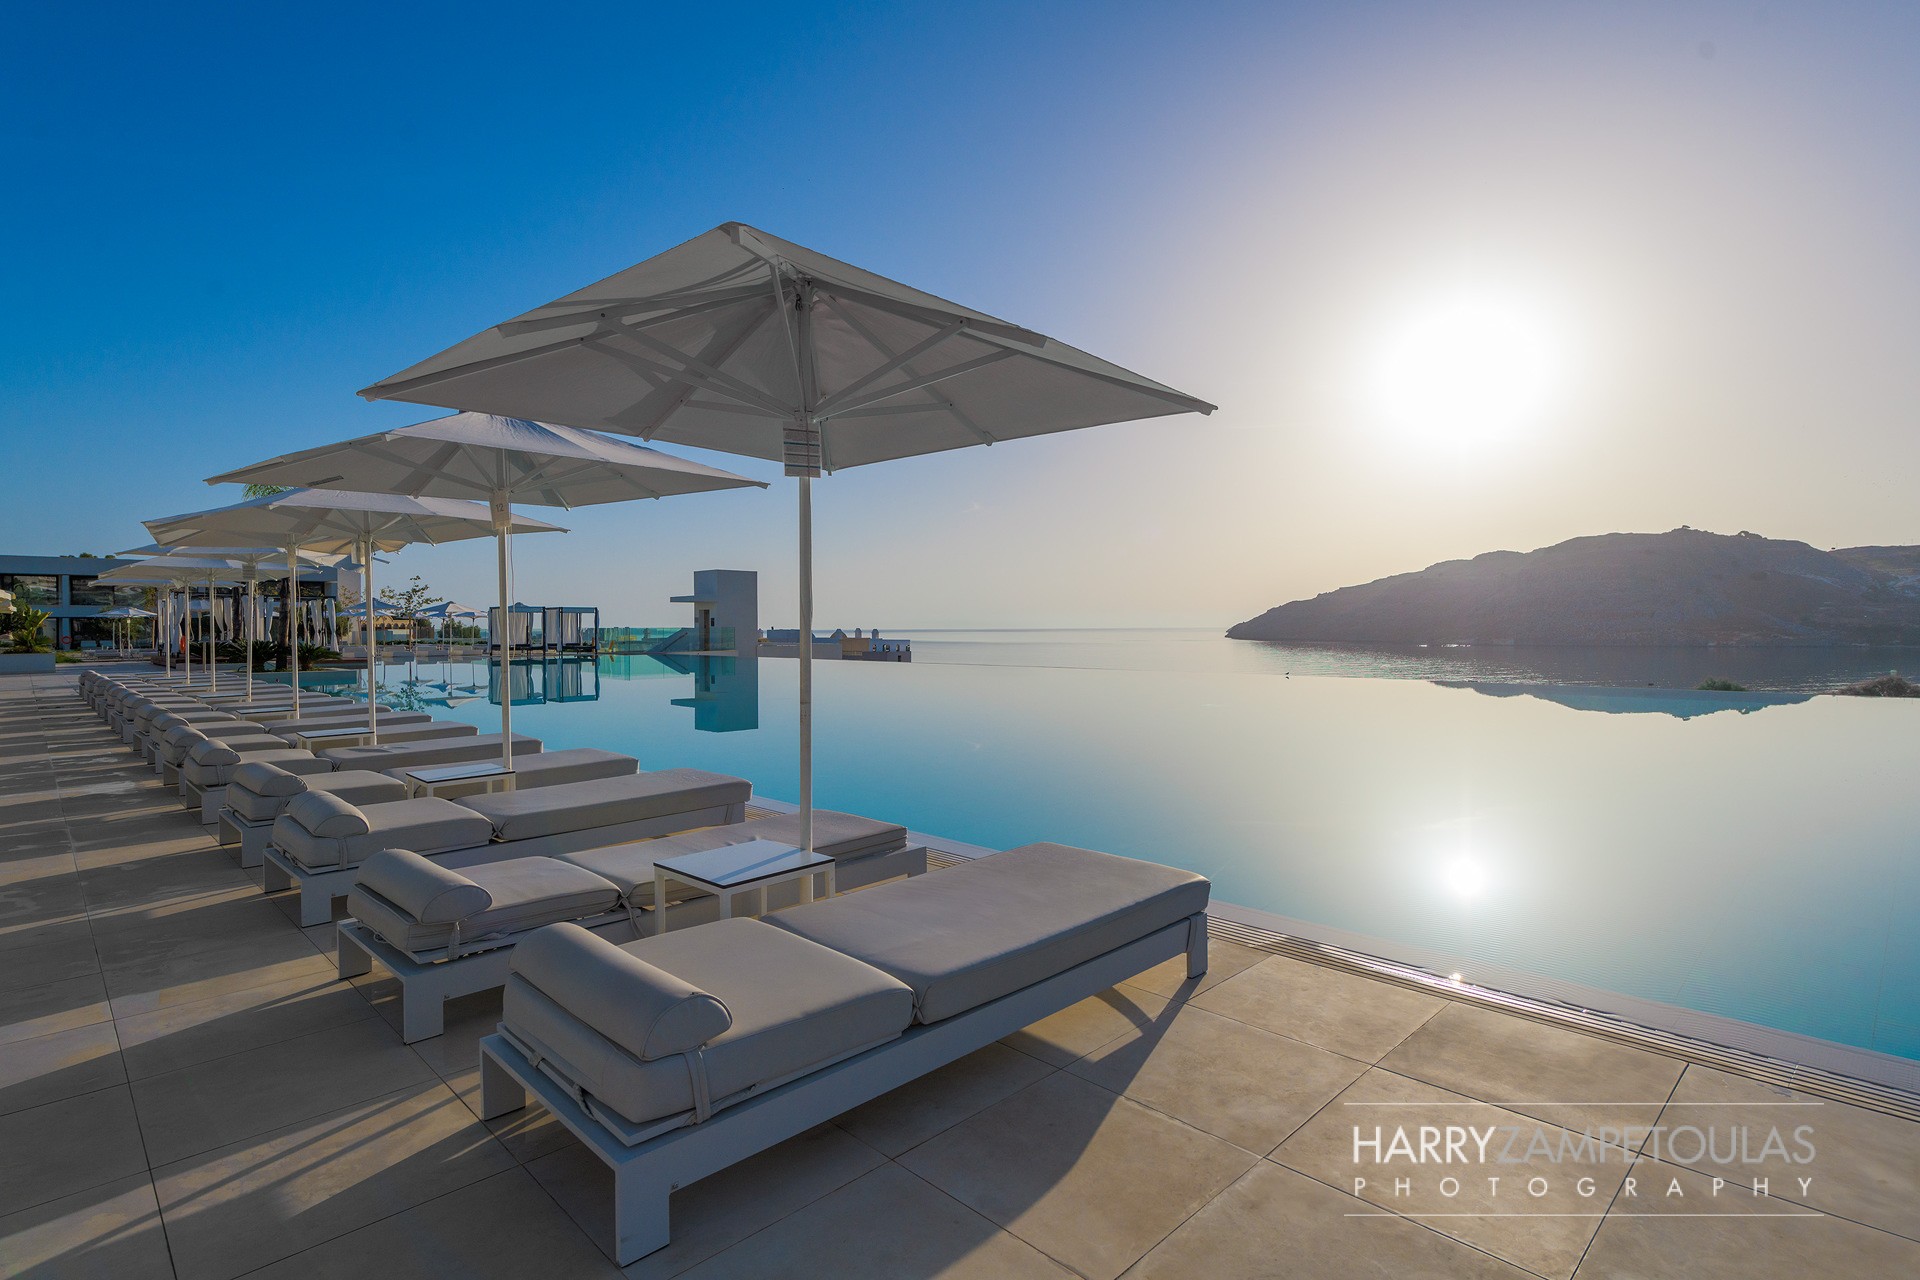 Harry-Zampetoulas-Photography-Lindos-Grand-14 Lindos Grand Resort & Spa - Hotel Photography by Harry Zampetoulas 